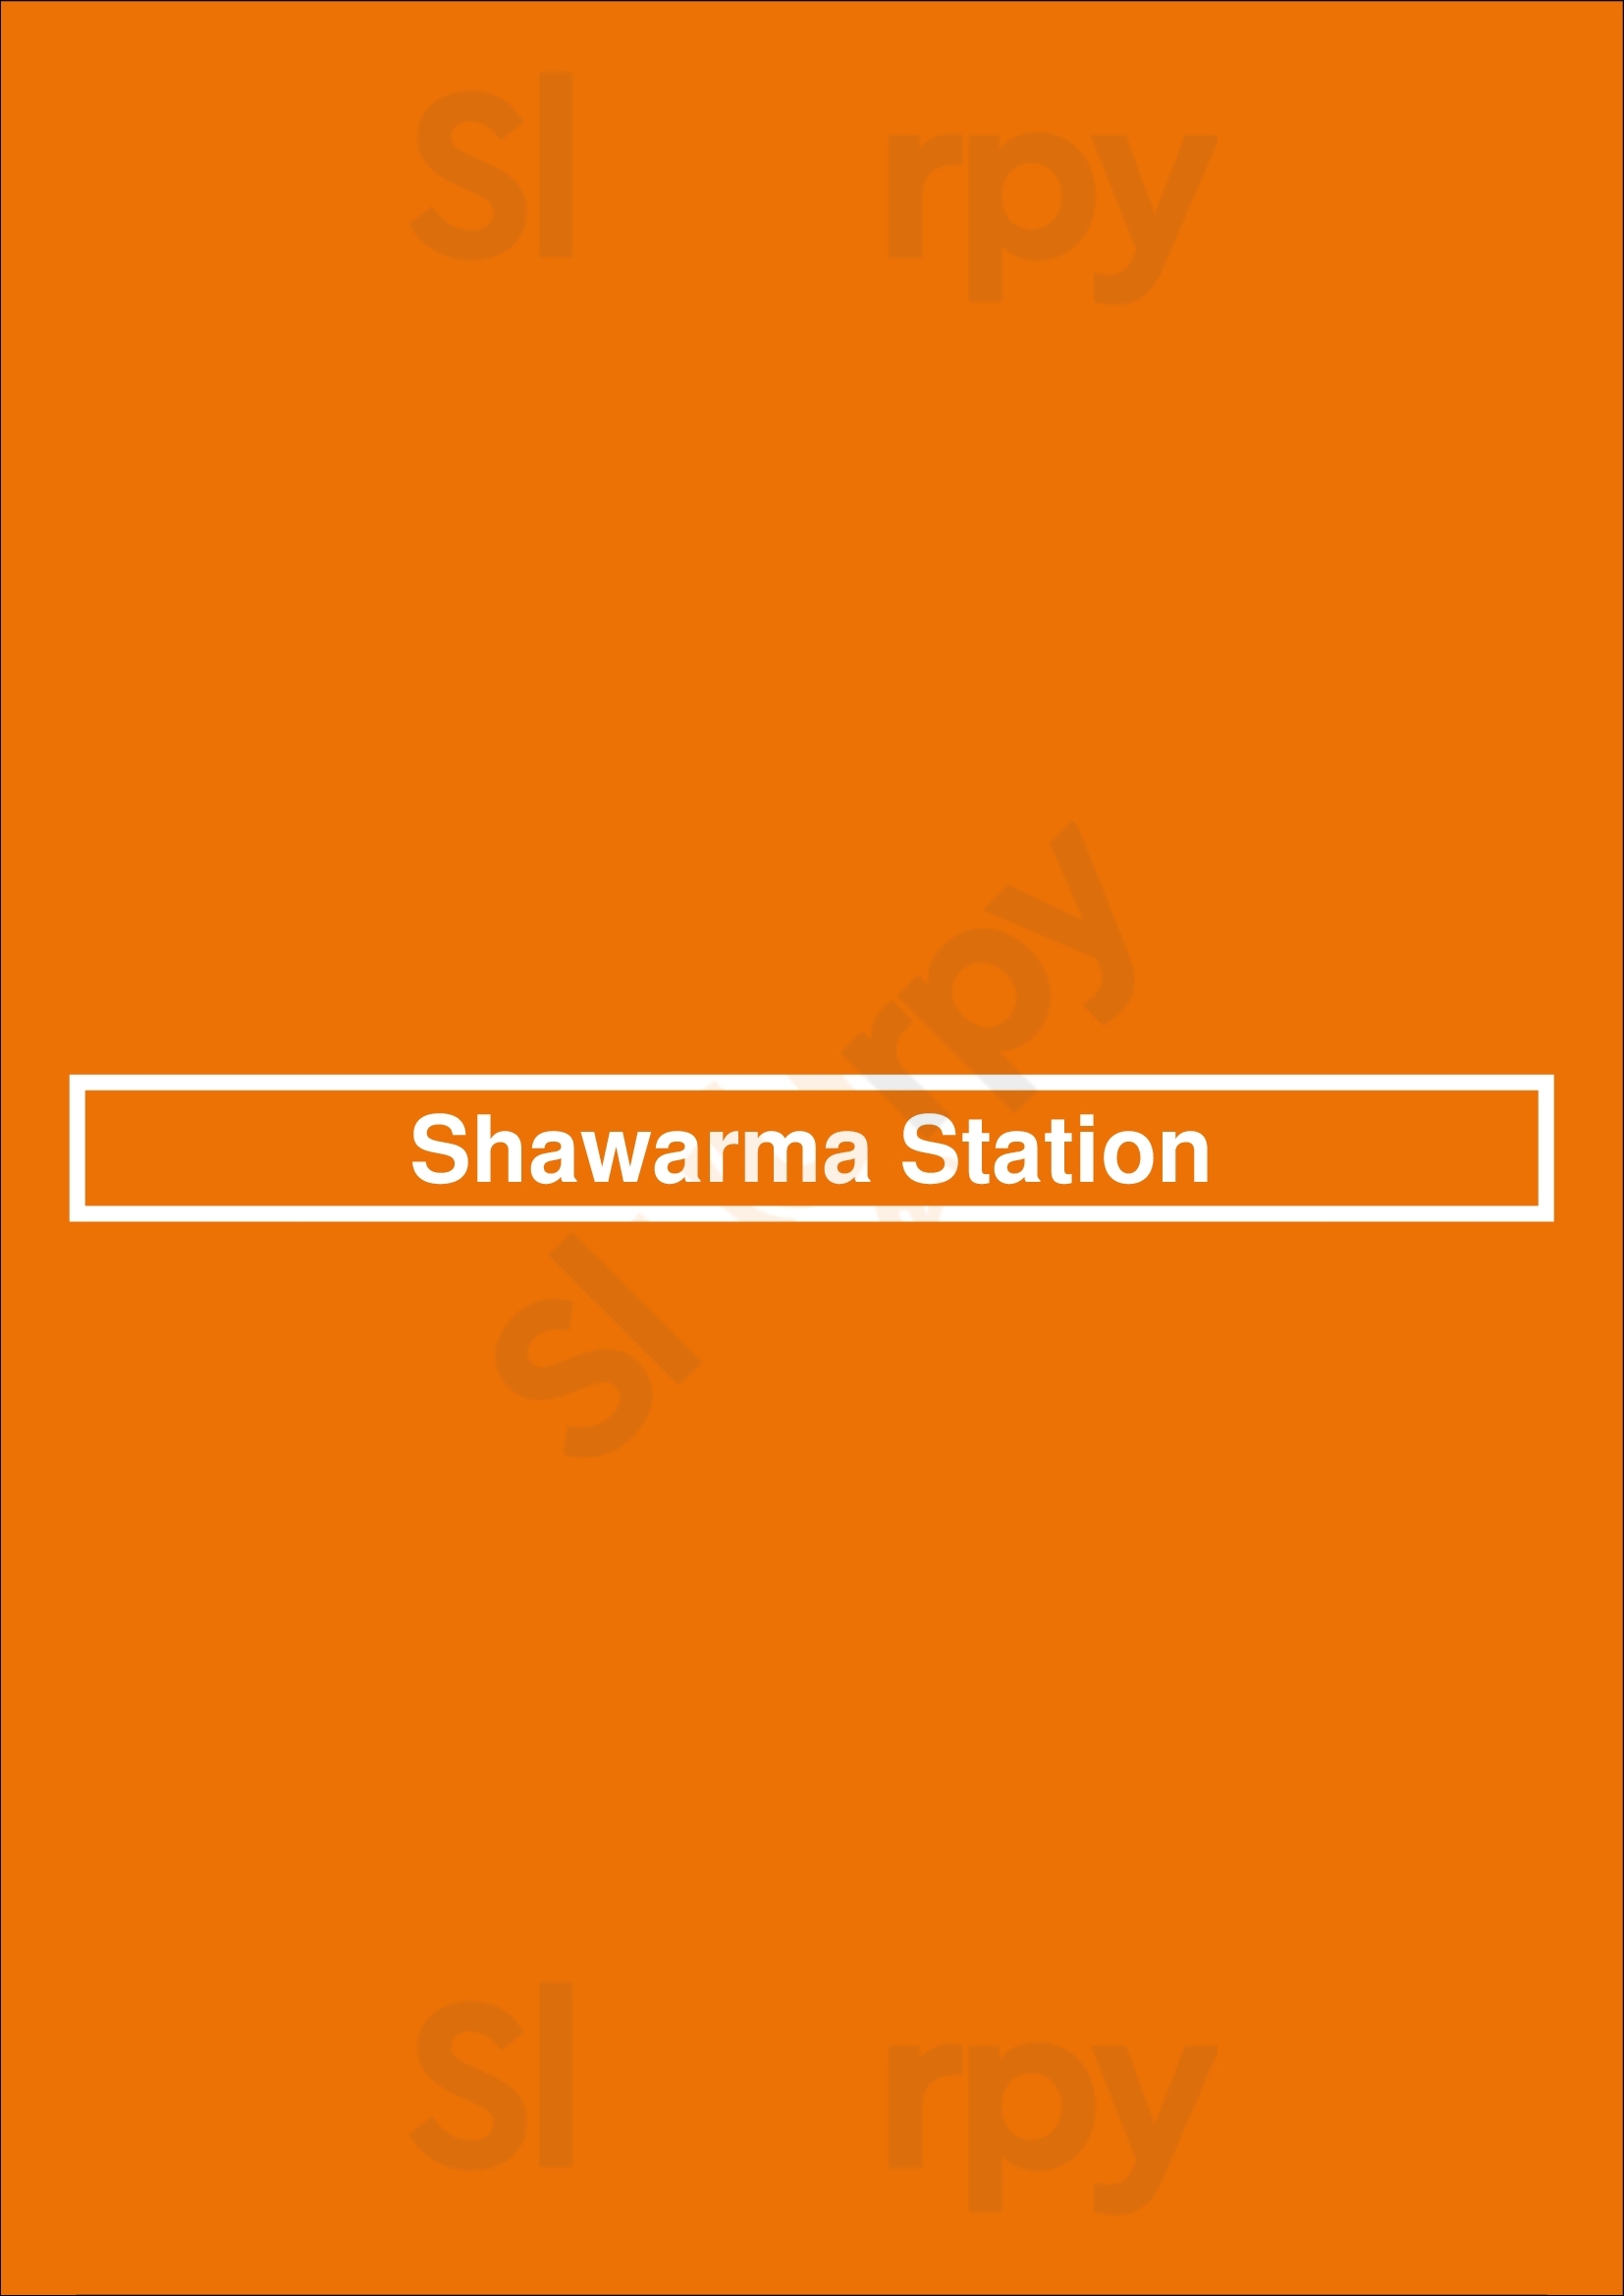 Shawarma Station Ottawa Menu - 1